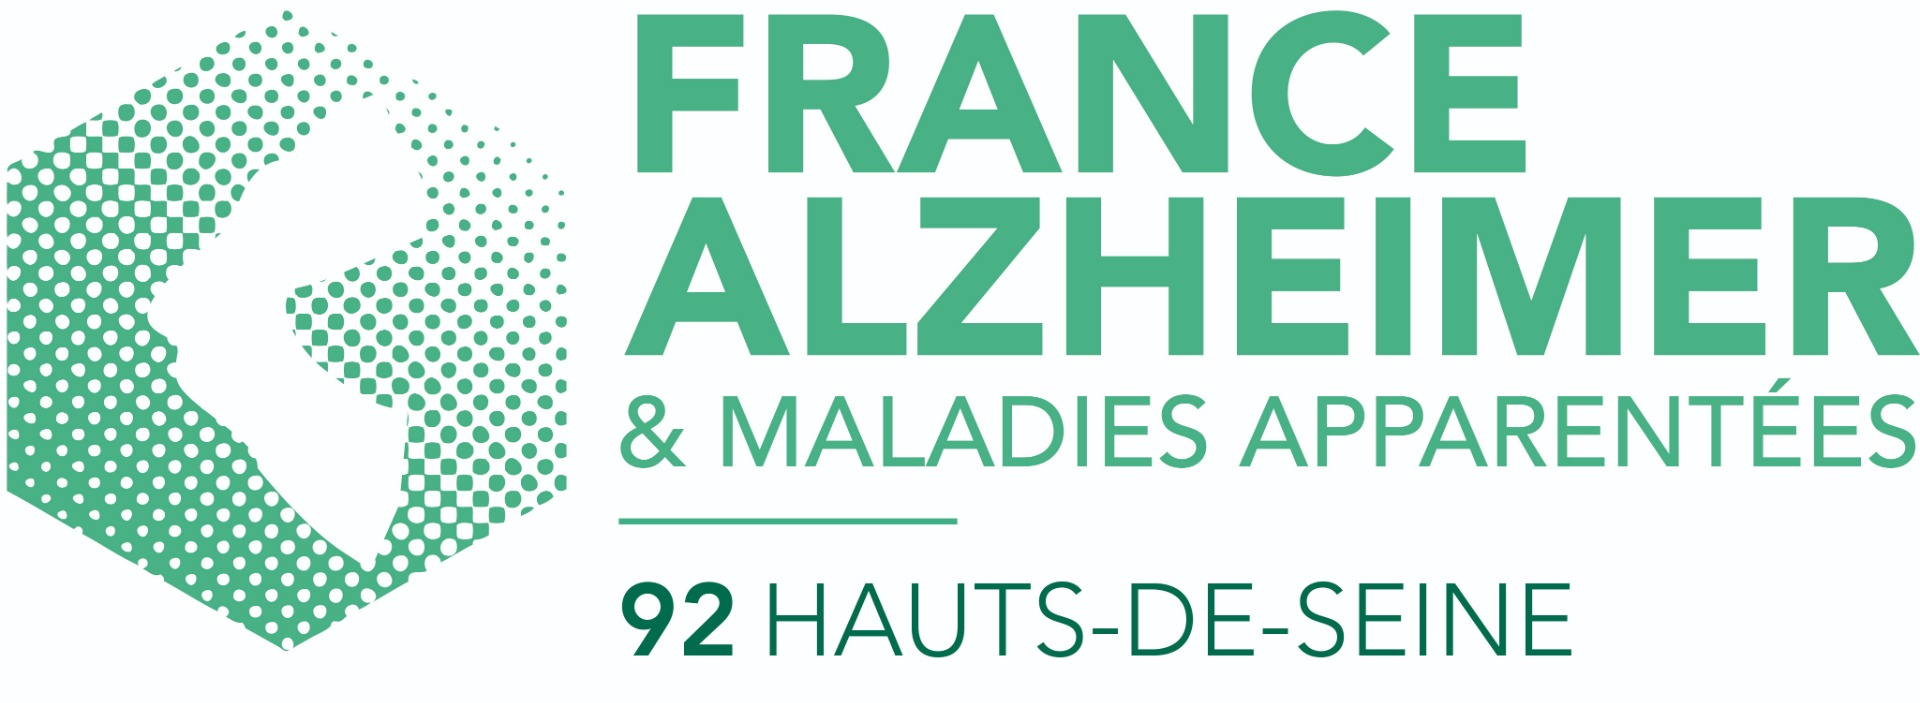 Photo de France Alzheimer Hauts-de-Seine à NEUILLY SUR SEINE